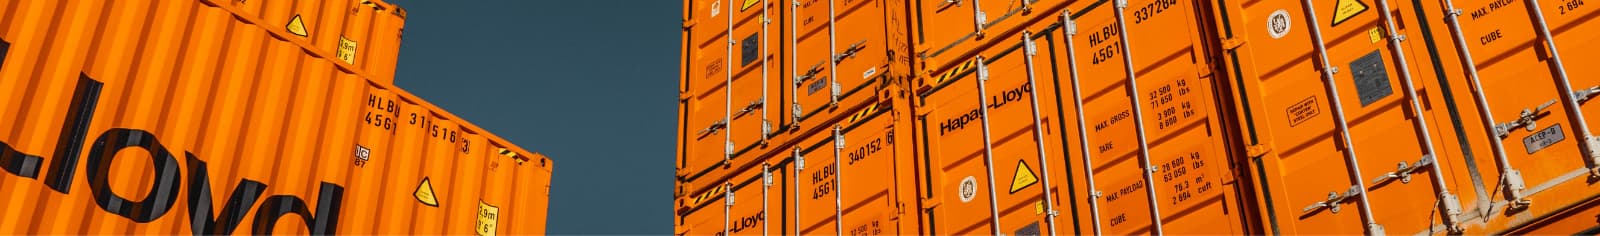 Orange shipping crates stacked